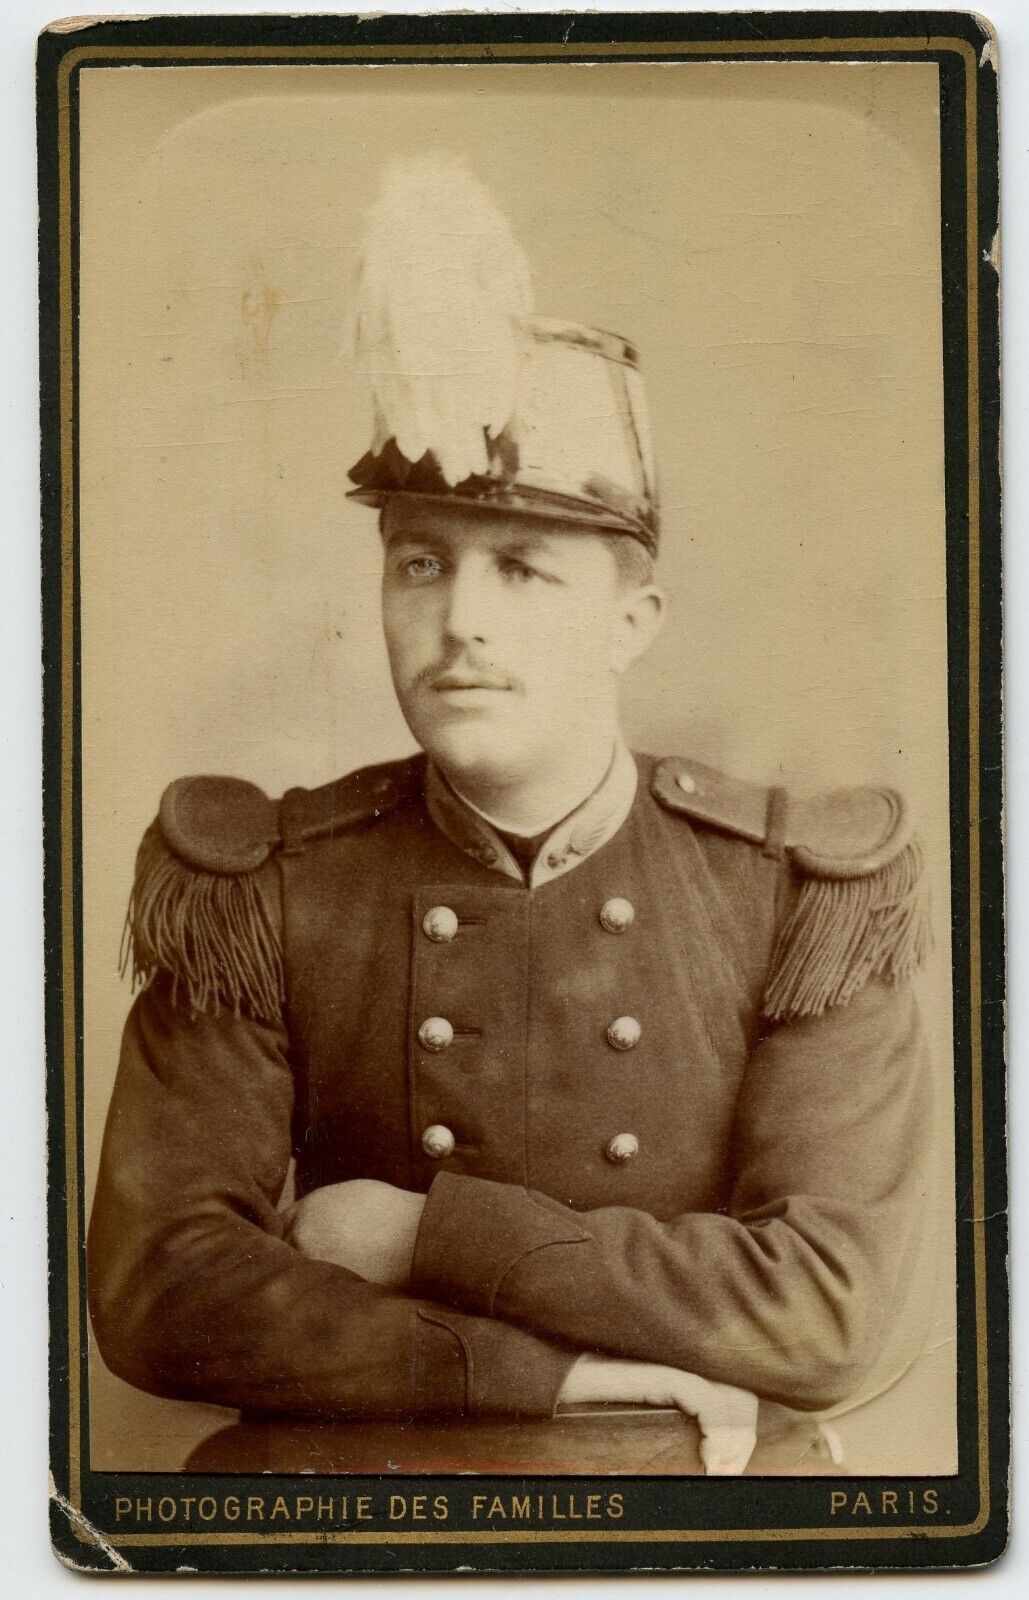  Man in Military Uniform Vintage CDV Photo by Oton , Paris France